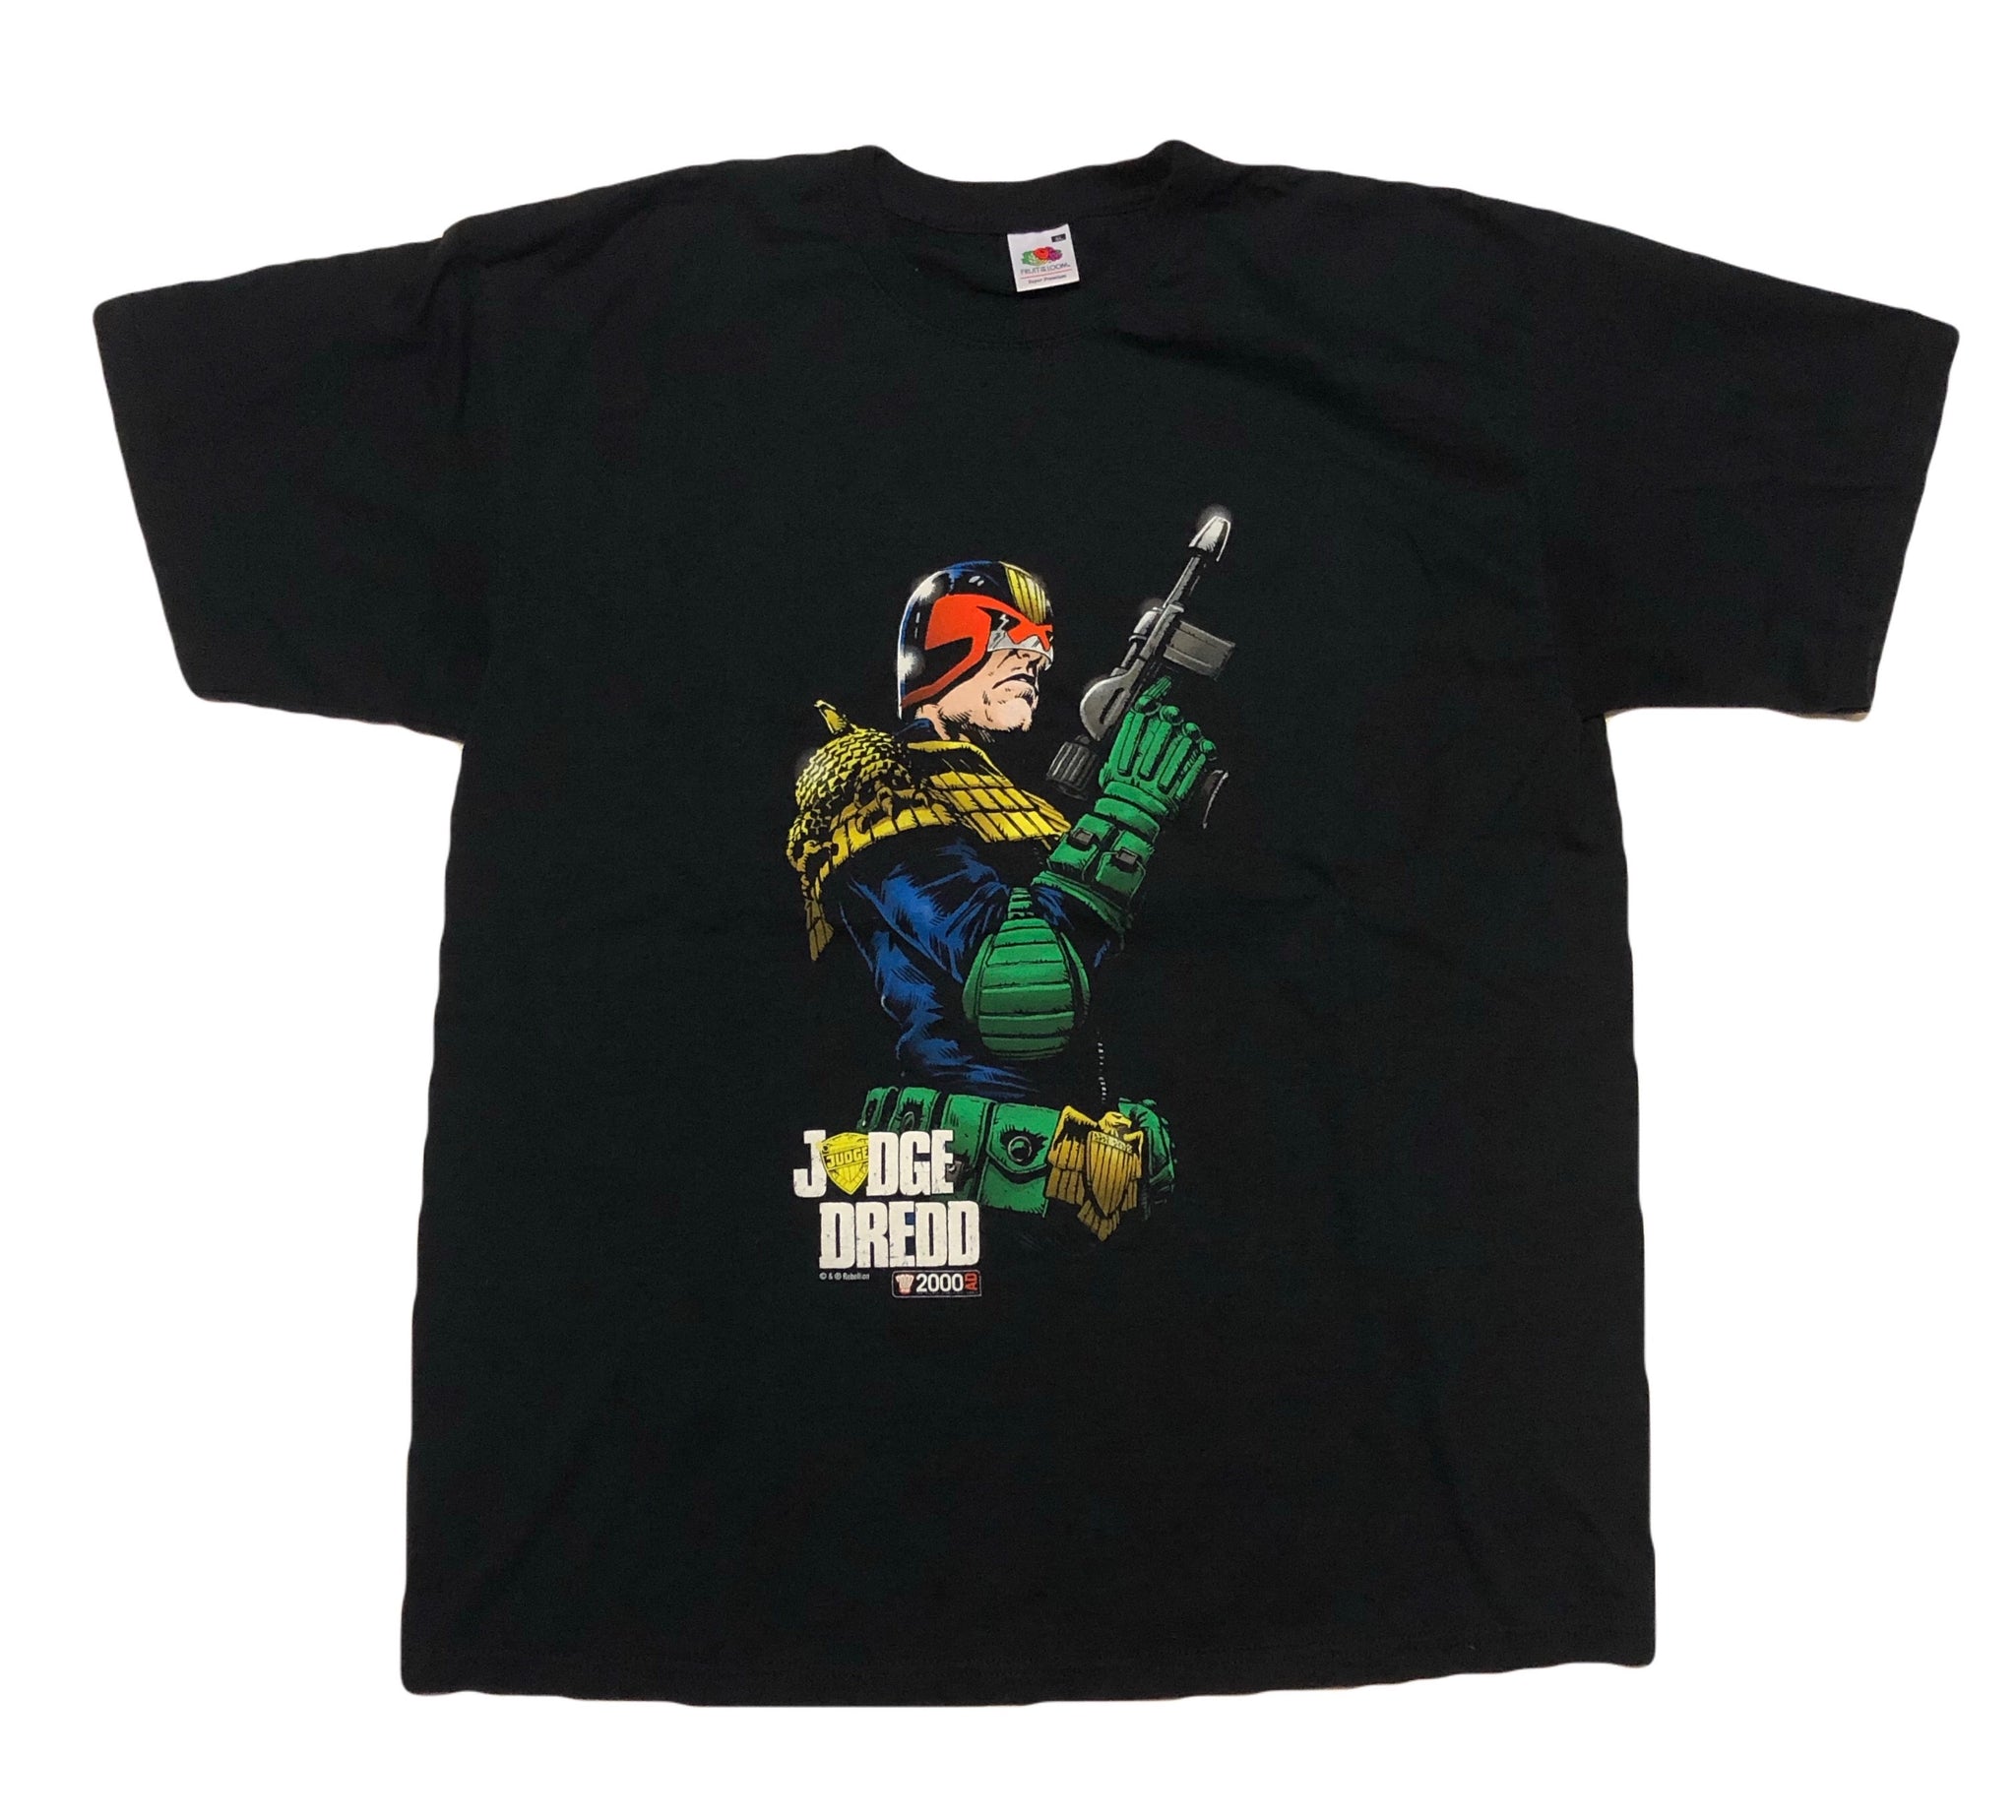 2000 Judge Dredd Shirt Size X-Large - Beyond 94